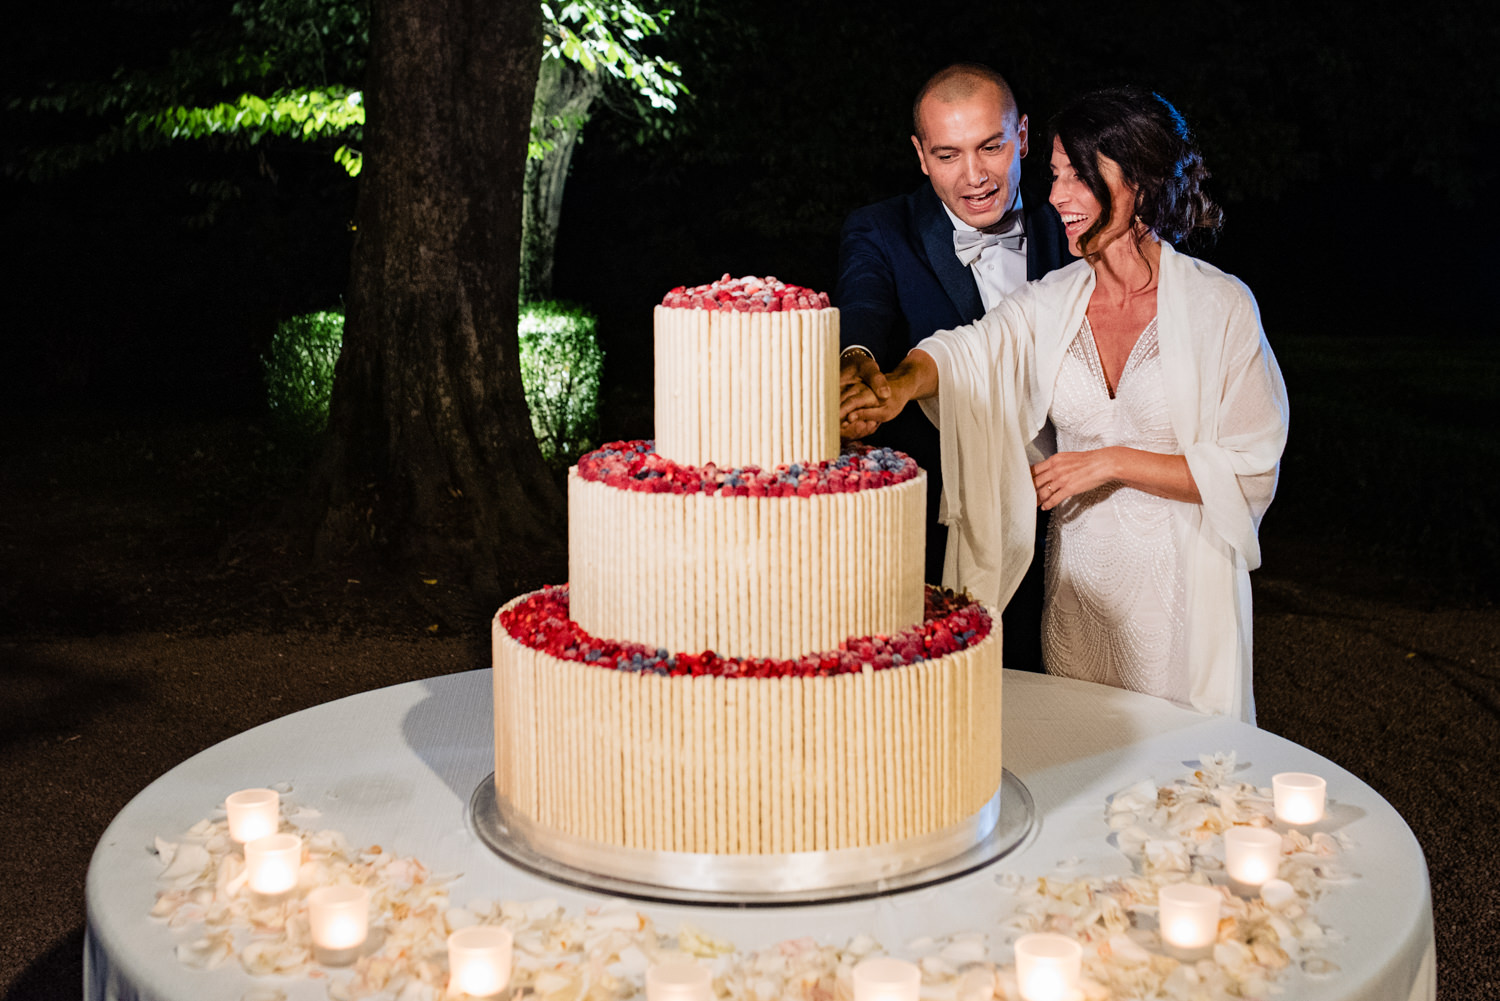 Taglio torta Fotografo matrimonio Villa Giannone Santuario di Saronno elegante spontaneo reportage moderno varese lamperti